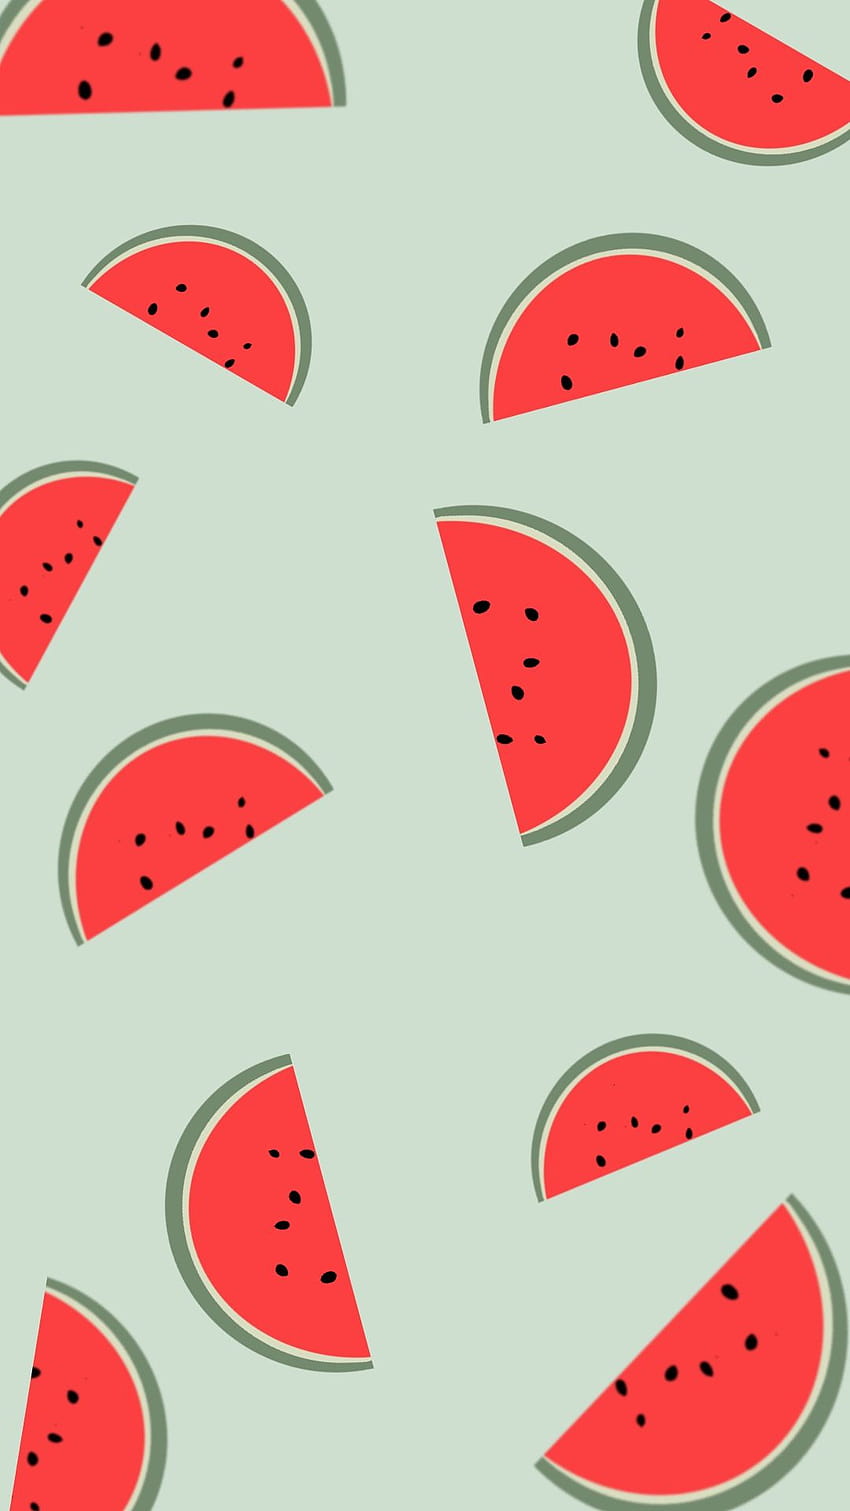 Idea] Watermelon Spike Skin, spike brawl stars HD wallpaper